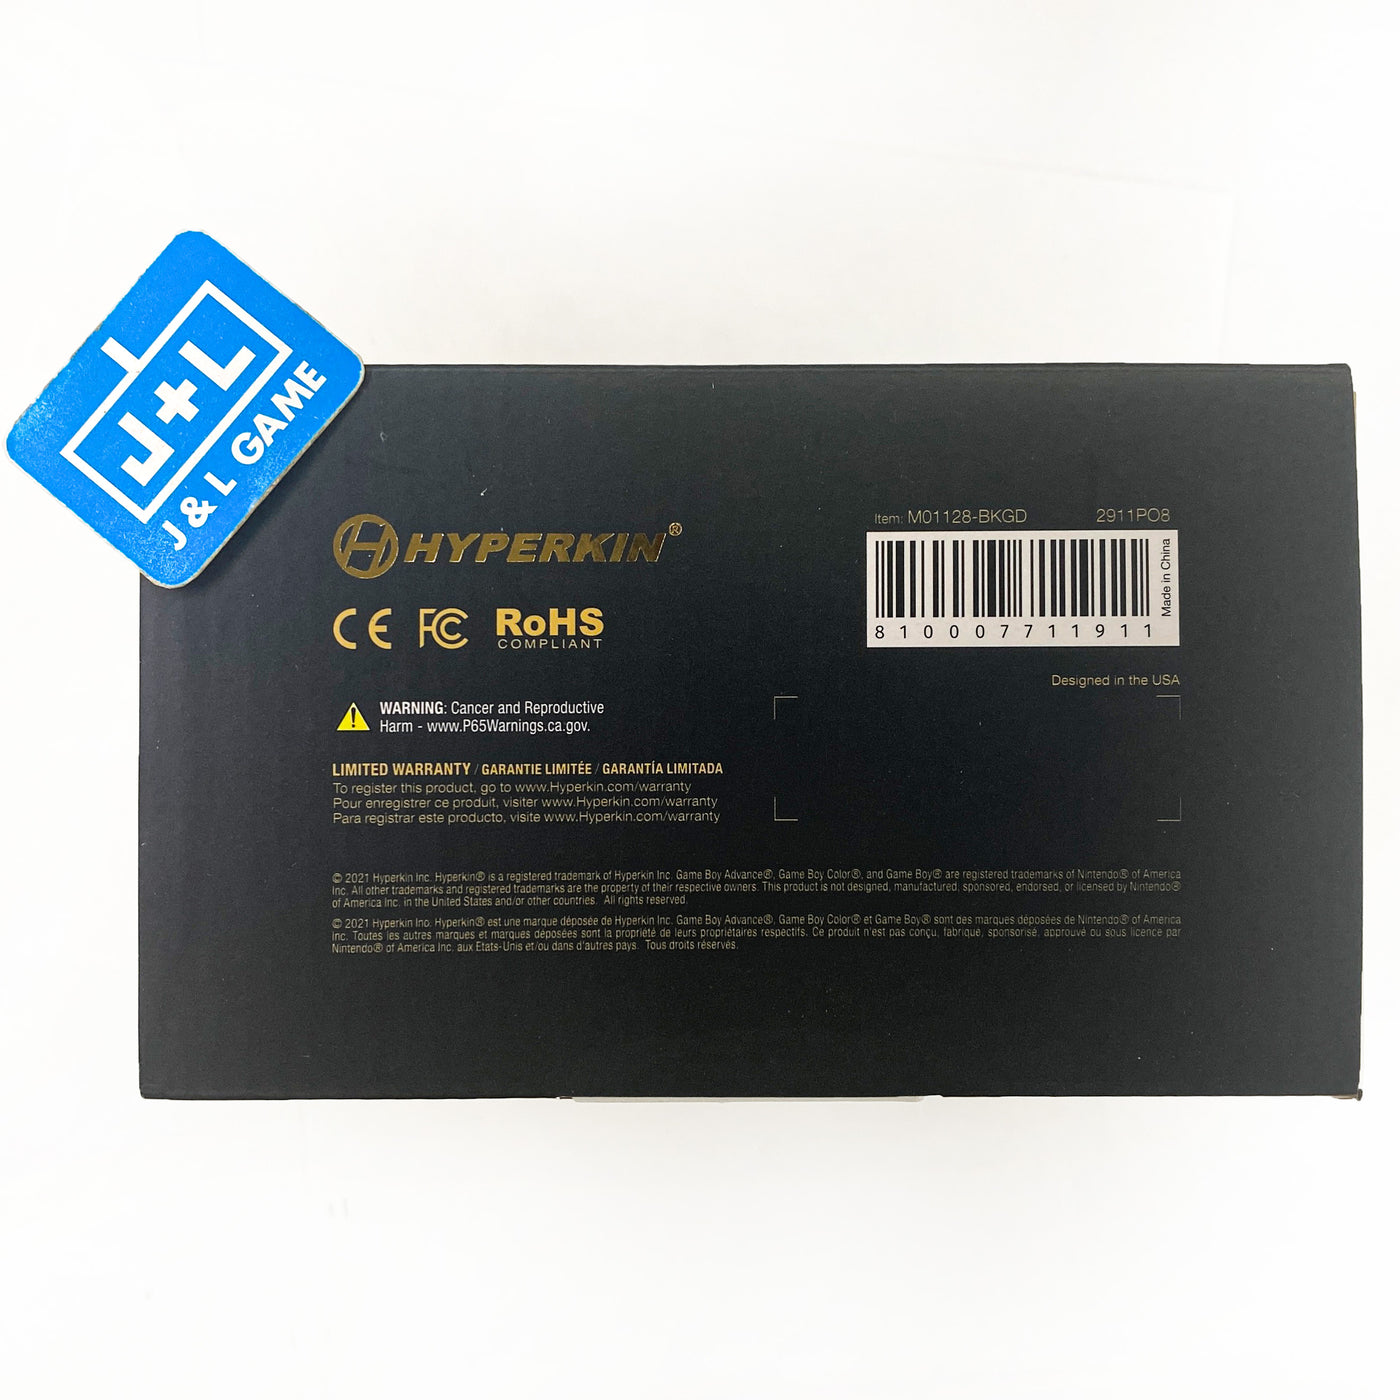 Hyperkin RetroN Sq: HD Gaming Console for Game Boy/Color/ Game Boy Advance (Black & Gold) - Game Boy Advance CONSOLE Hyperkin   